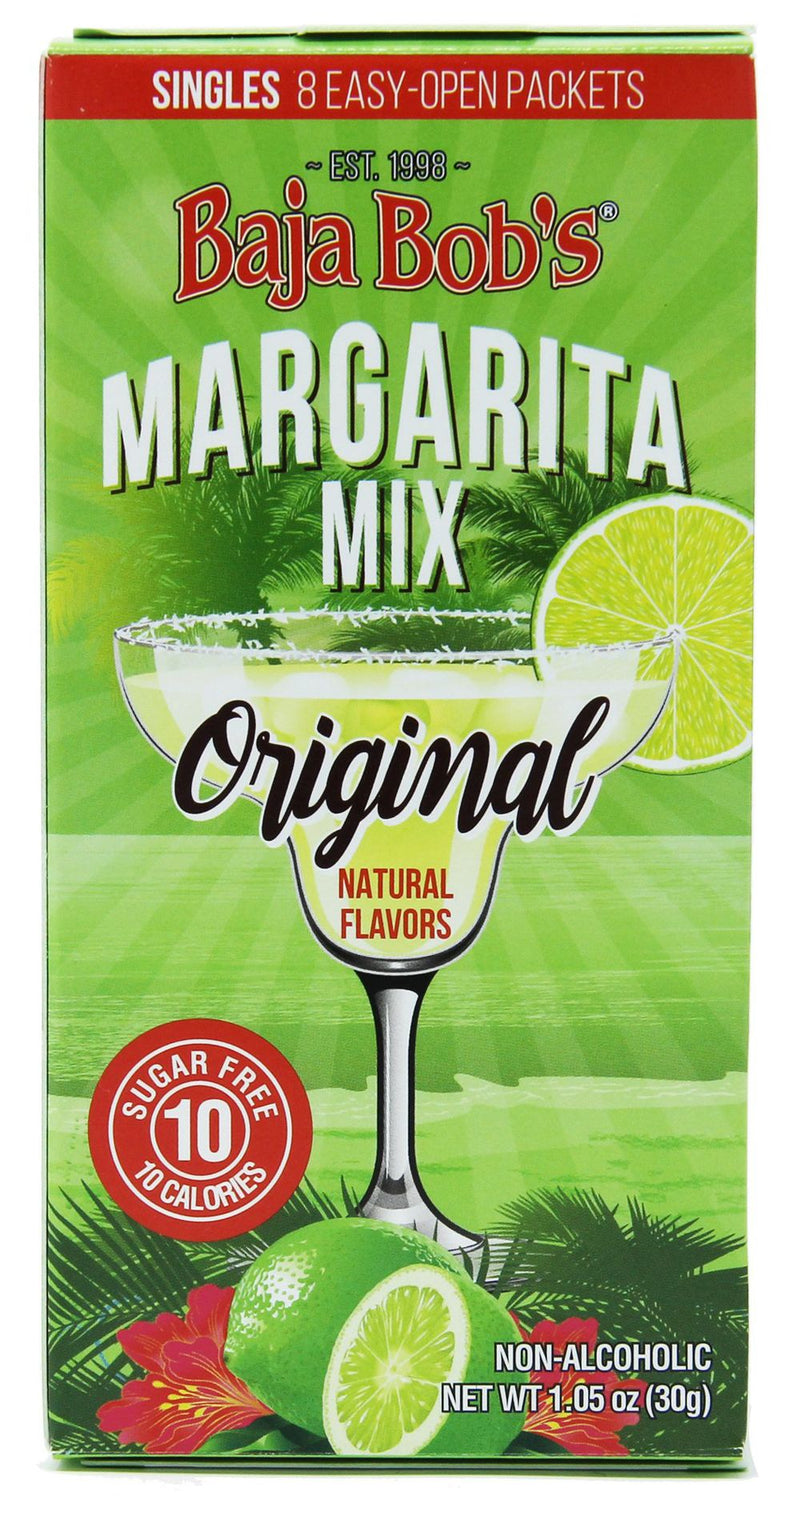 Baja Bob's Margarita Mix Singles